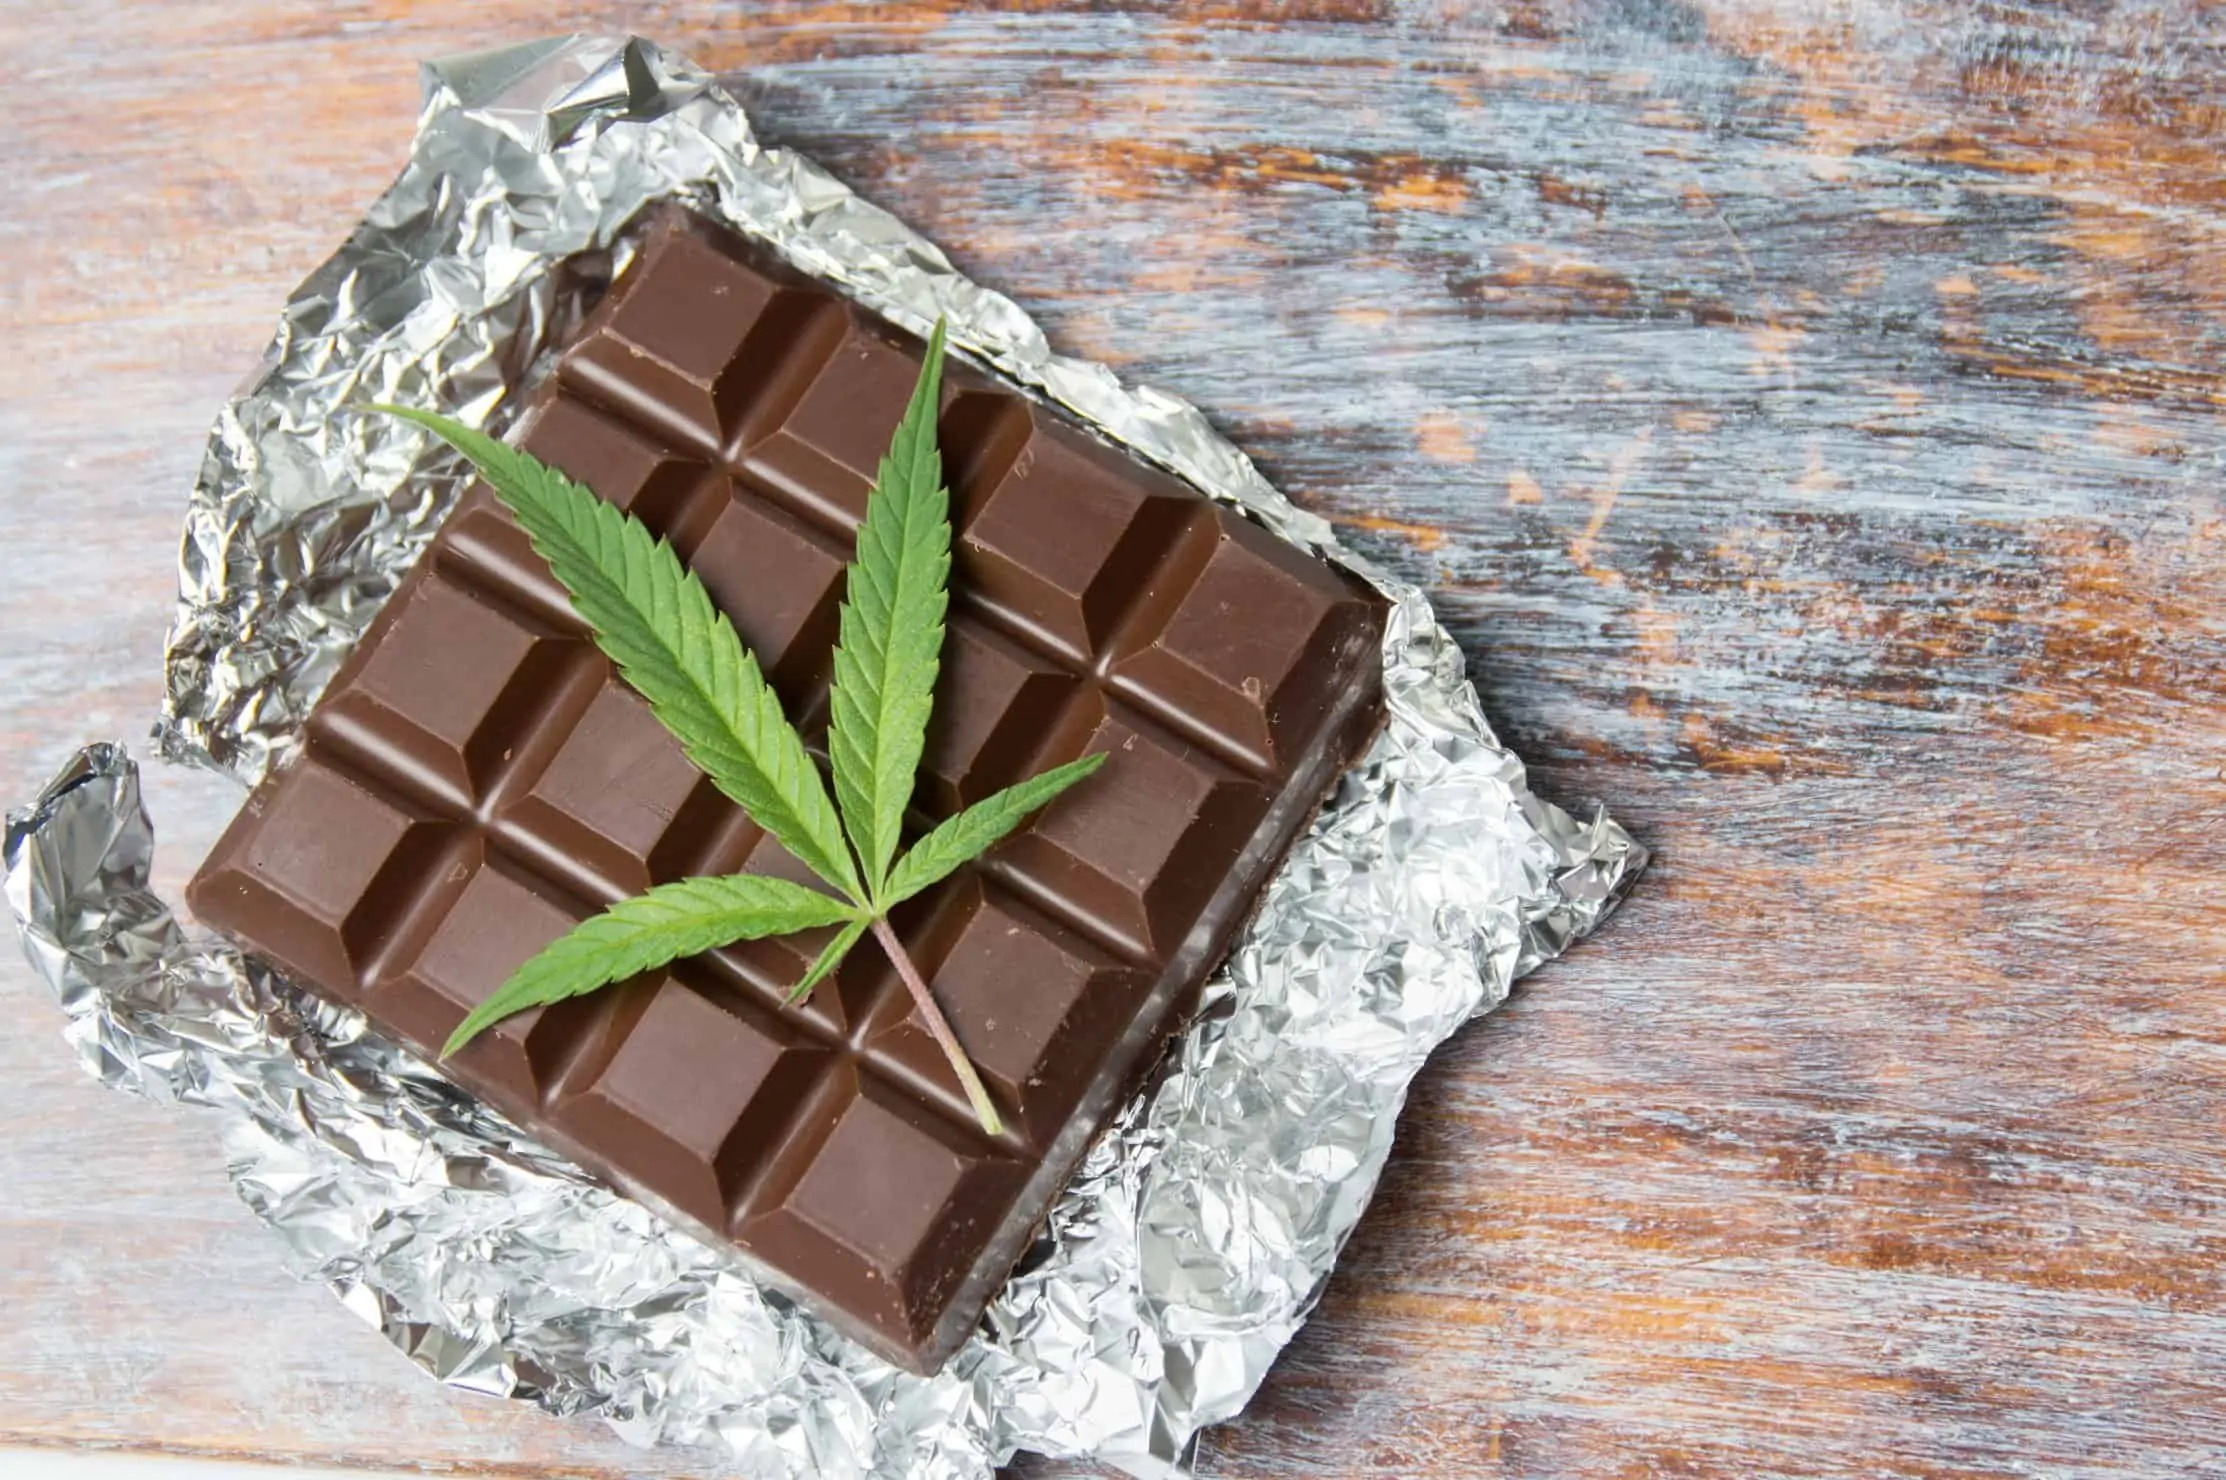 Controlling potency of marijuana edibles